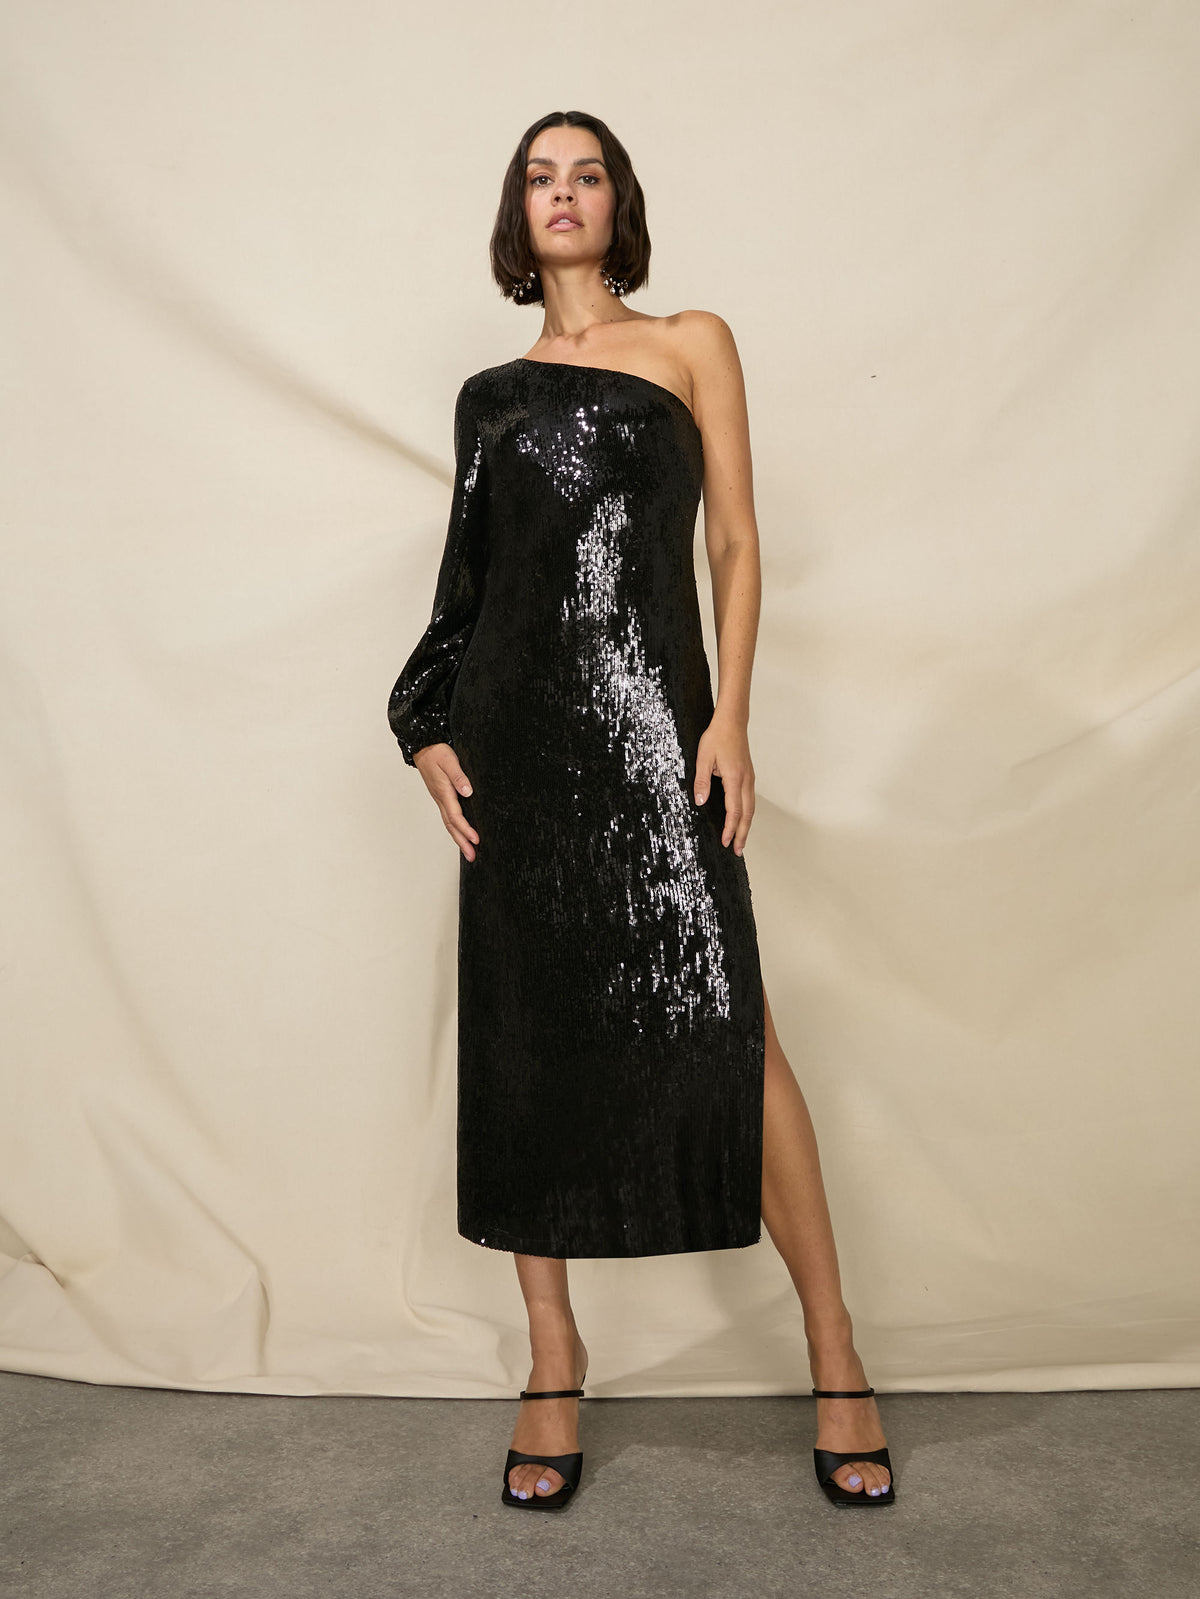 Petite Selena Black Sequin One Shoulder Dress